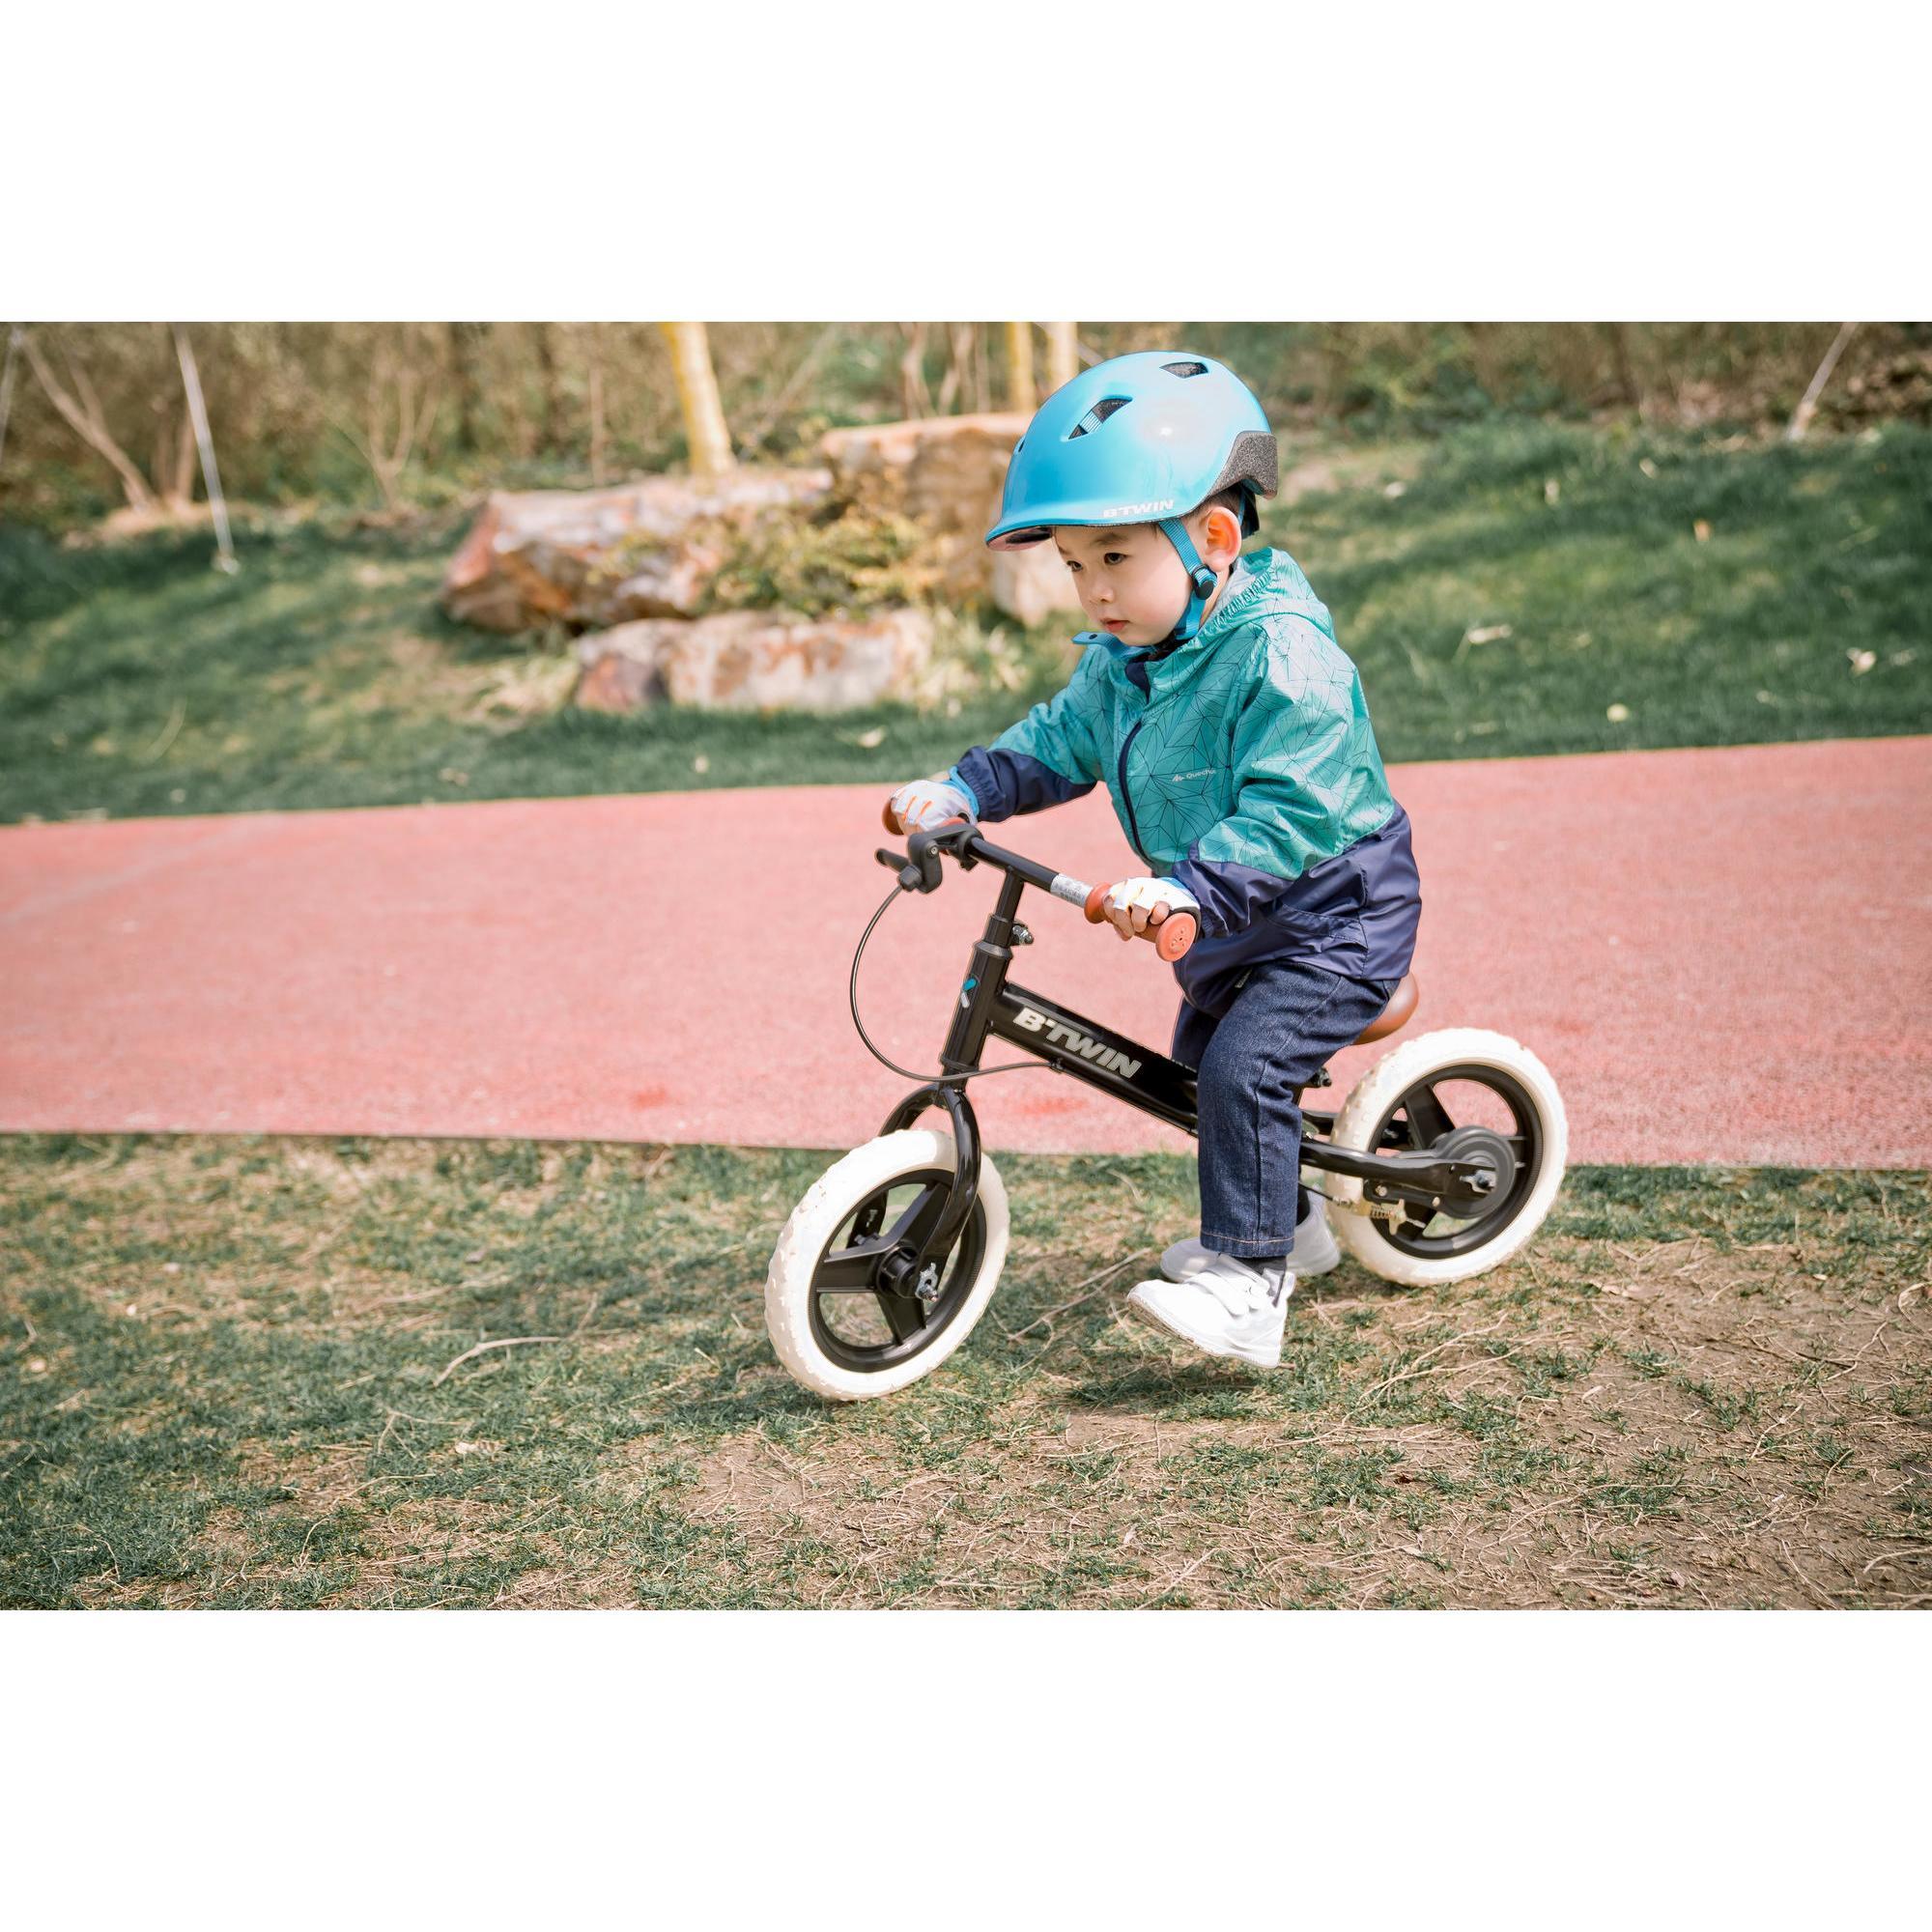 kid riding balance bike